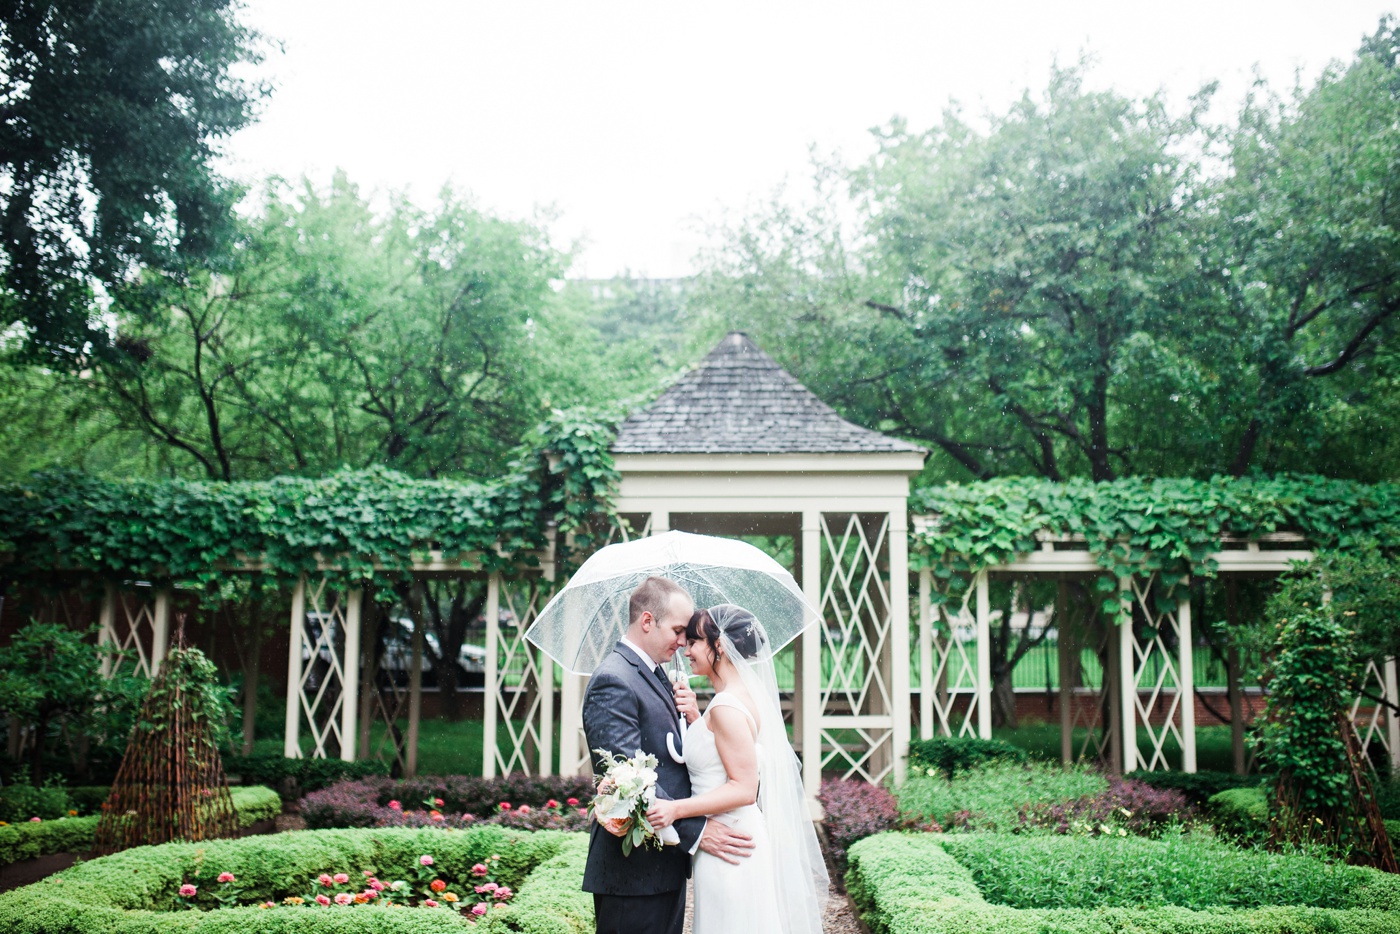 26 - Bride + Groom Portraits - Philadelphia Wedding Photographer - Alison Dunn Photography photo